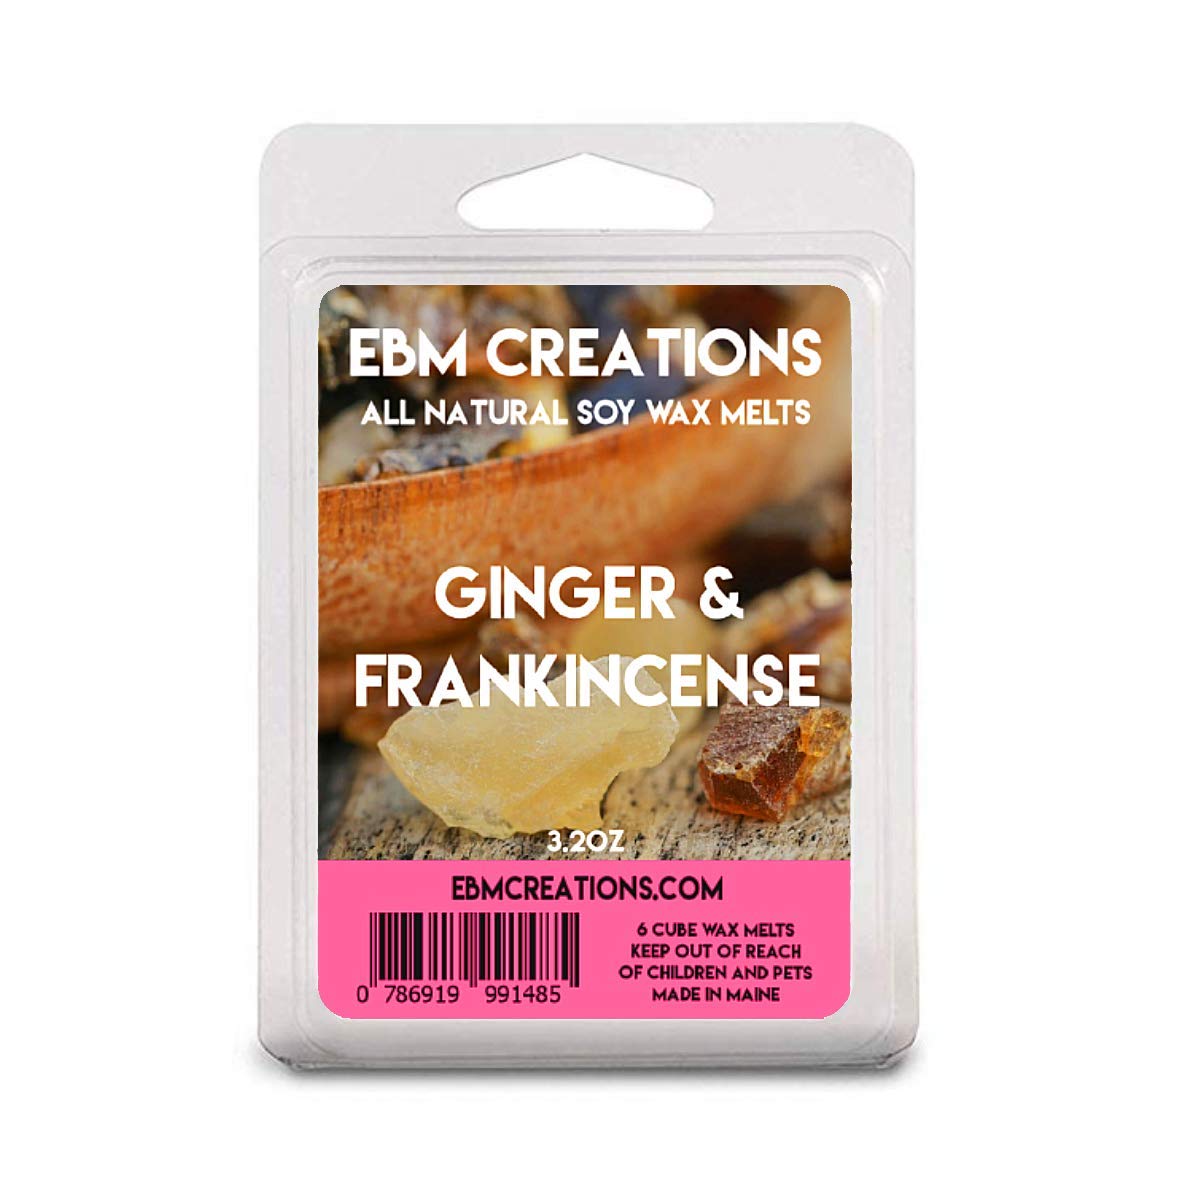 Ginger & Frankincense - 3.2 oz Clamshell